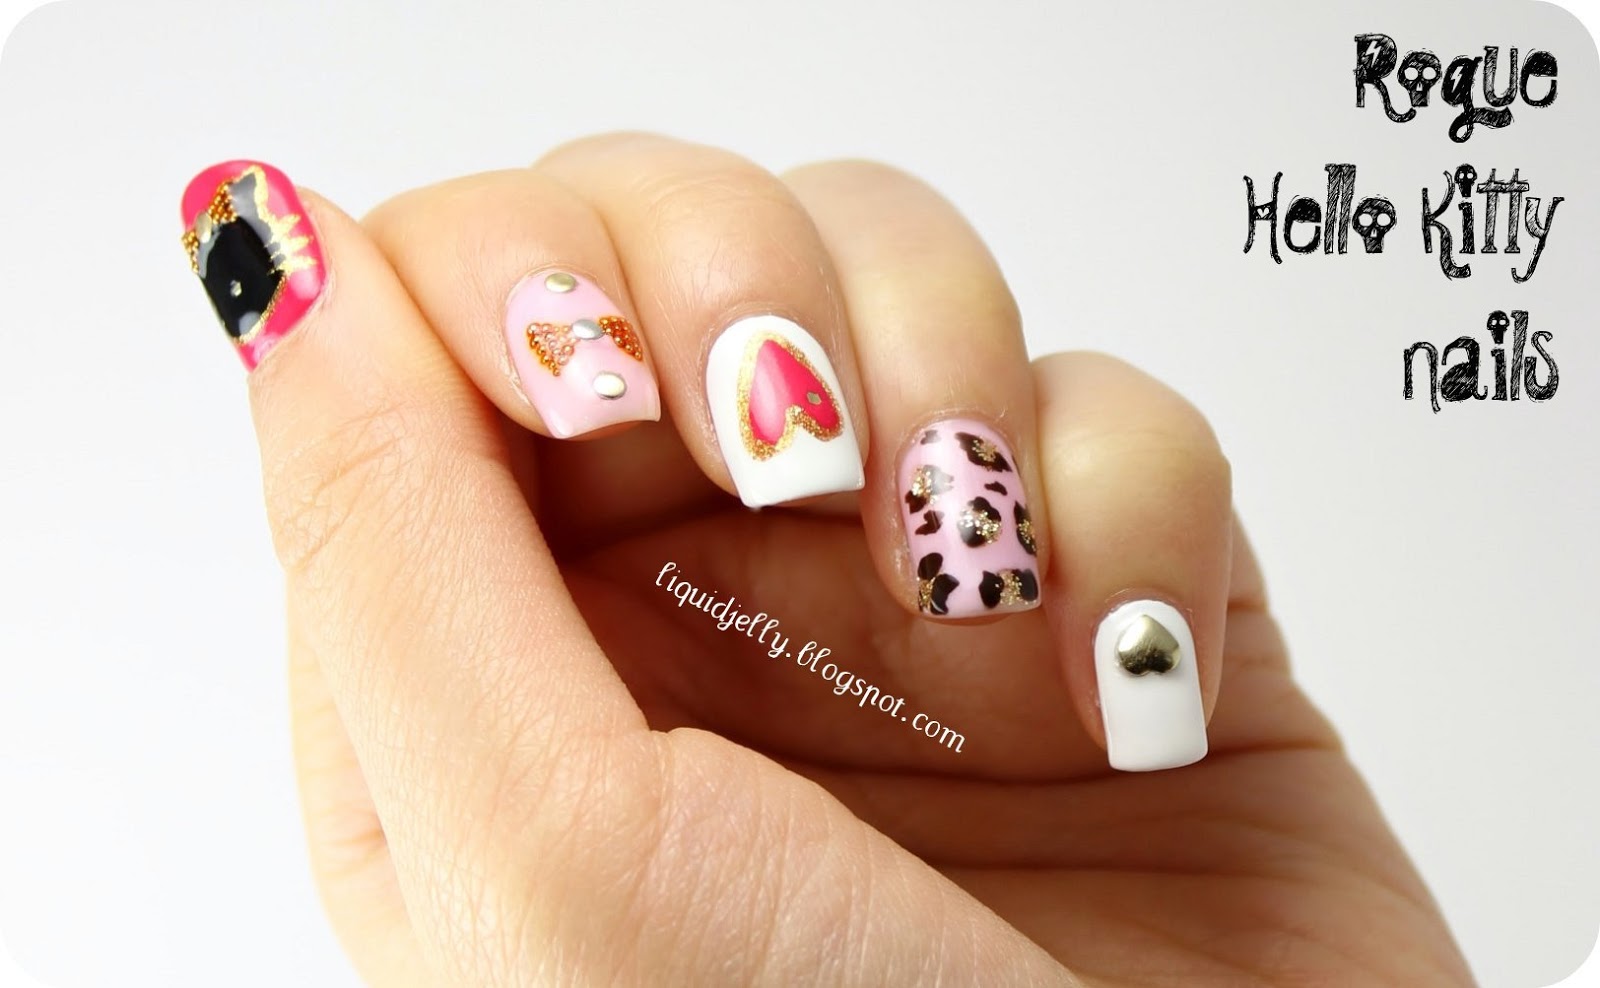 Hello Kitty Nail Art Designs on Tumblr - wide 2